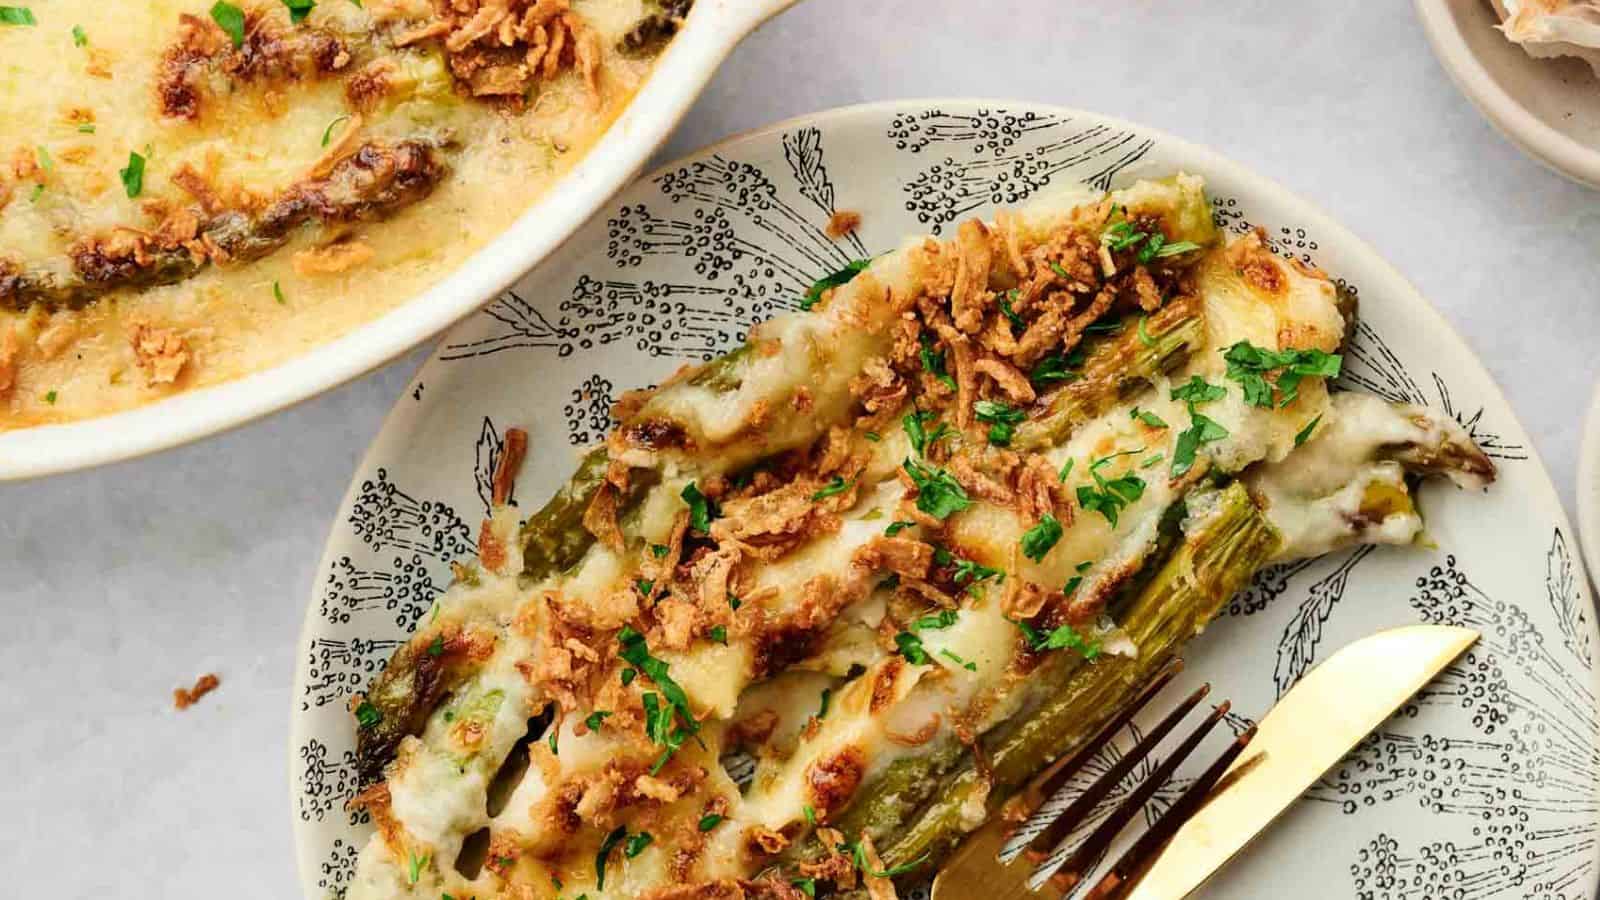 Cheesy asparagus casserole on a plate with a fork.